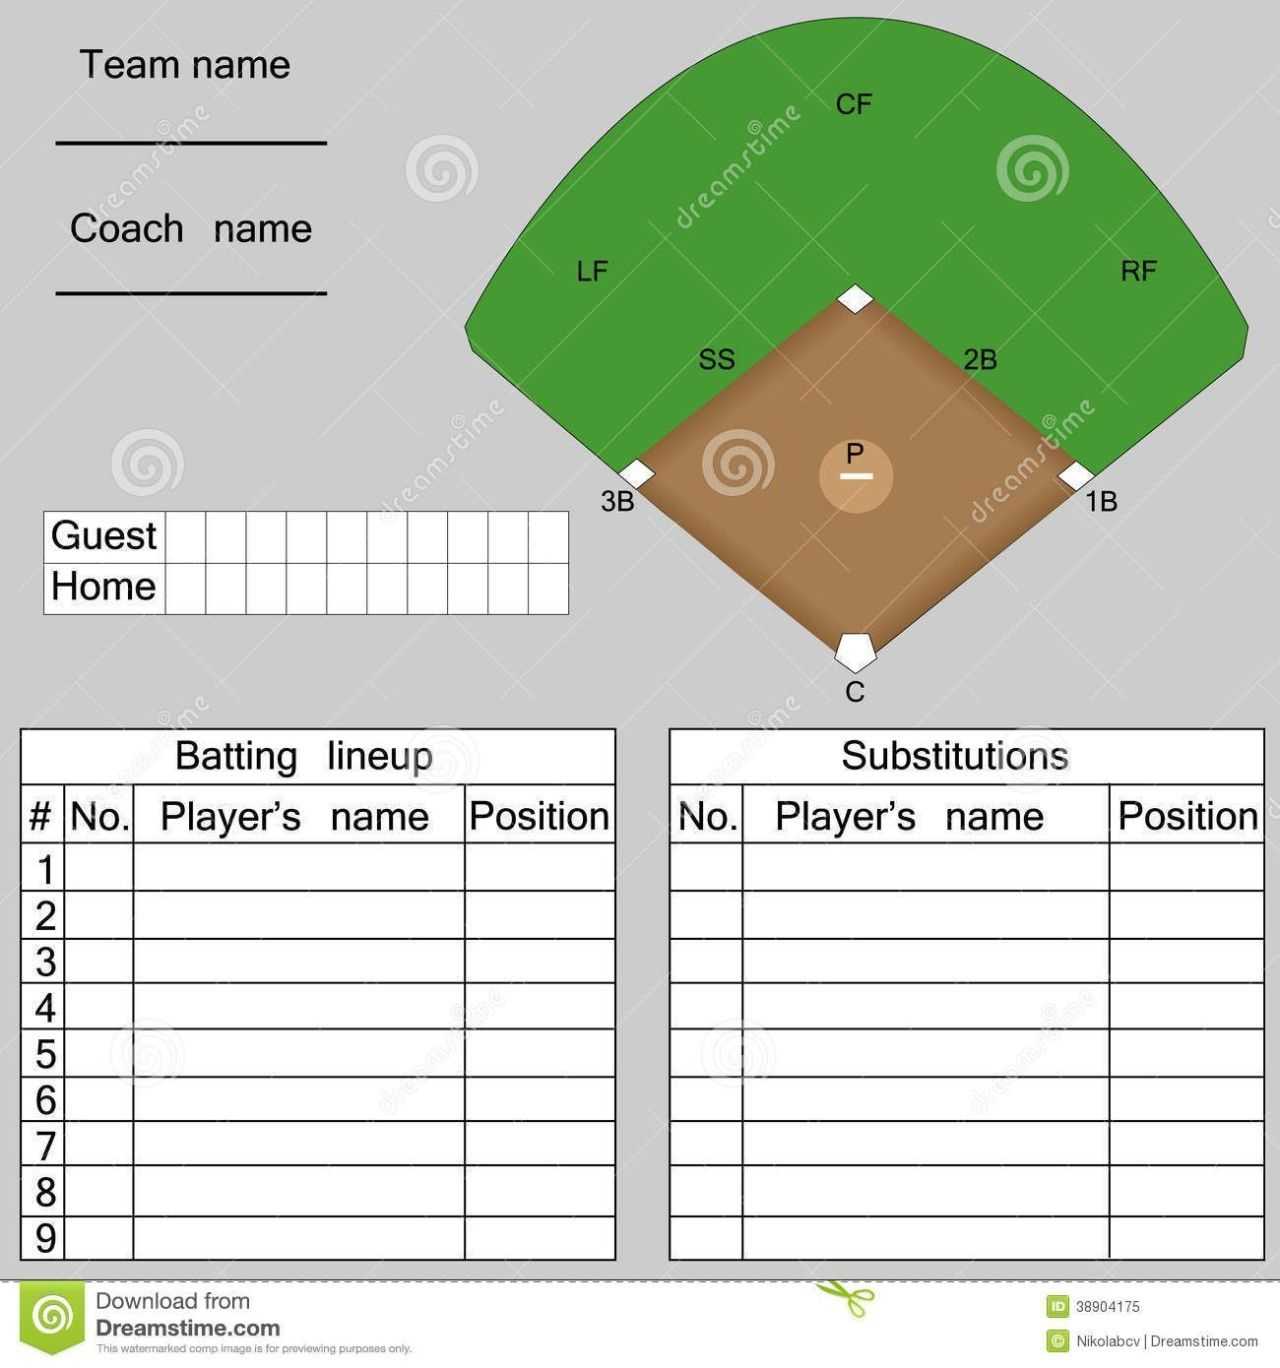 Baseball Lineup Card Template – Free Download | Baseball Pertaining To Dugout Lineup Card Template